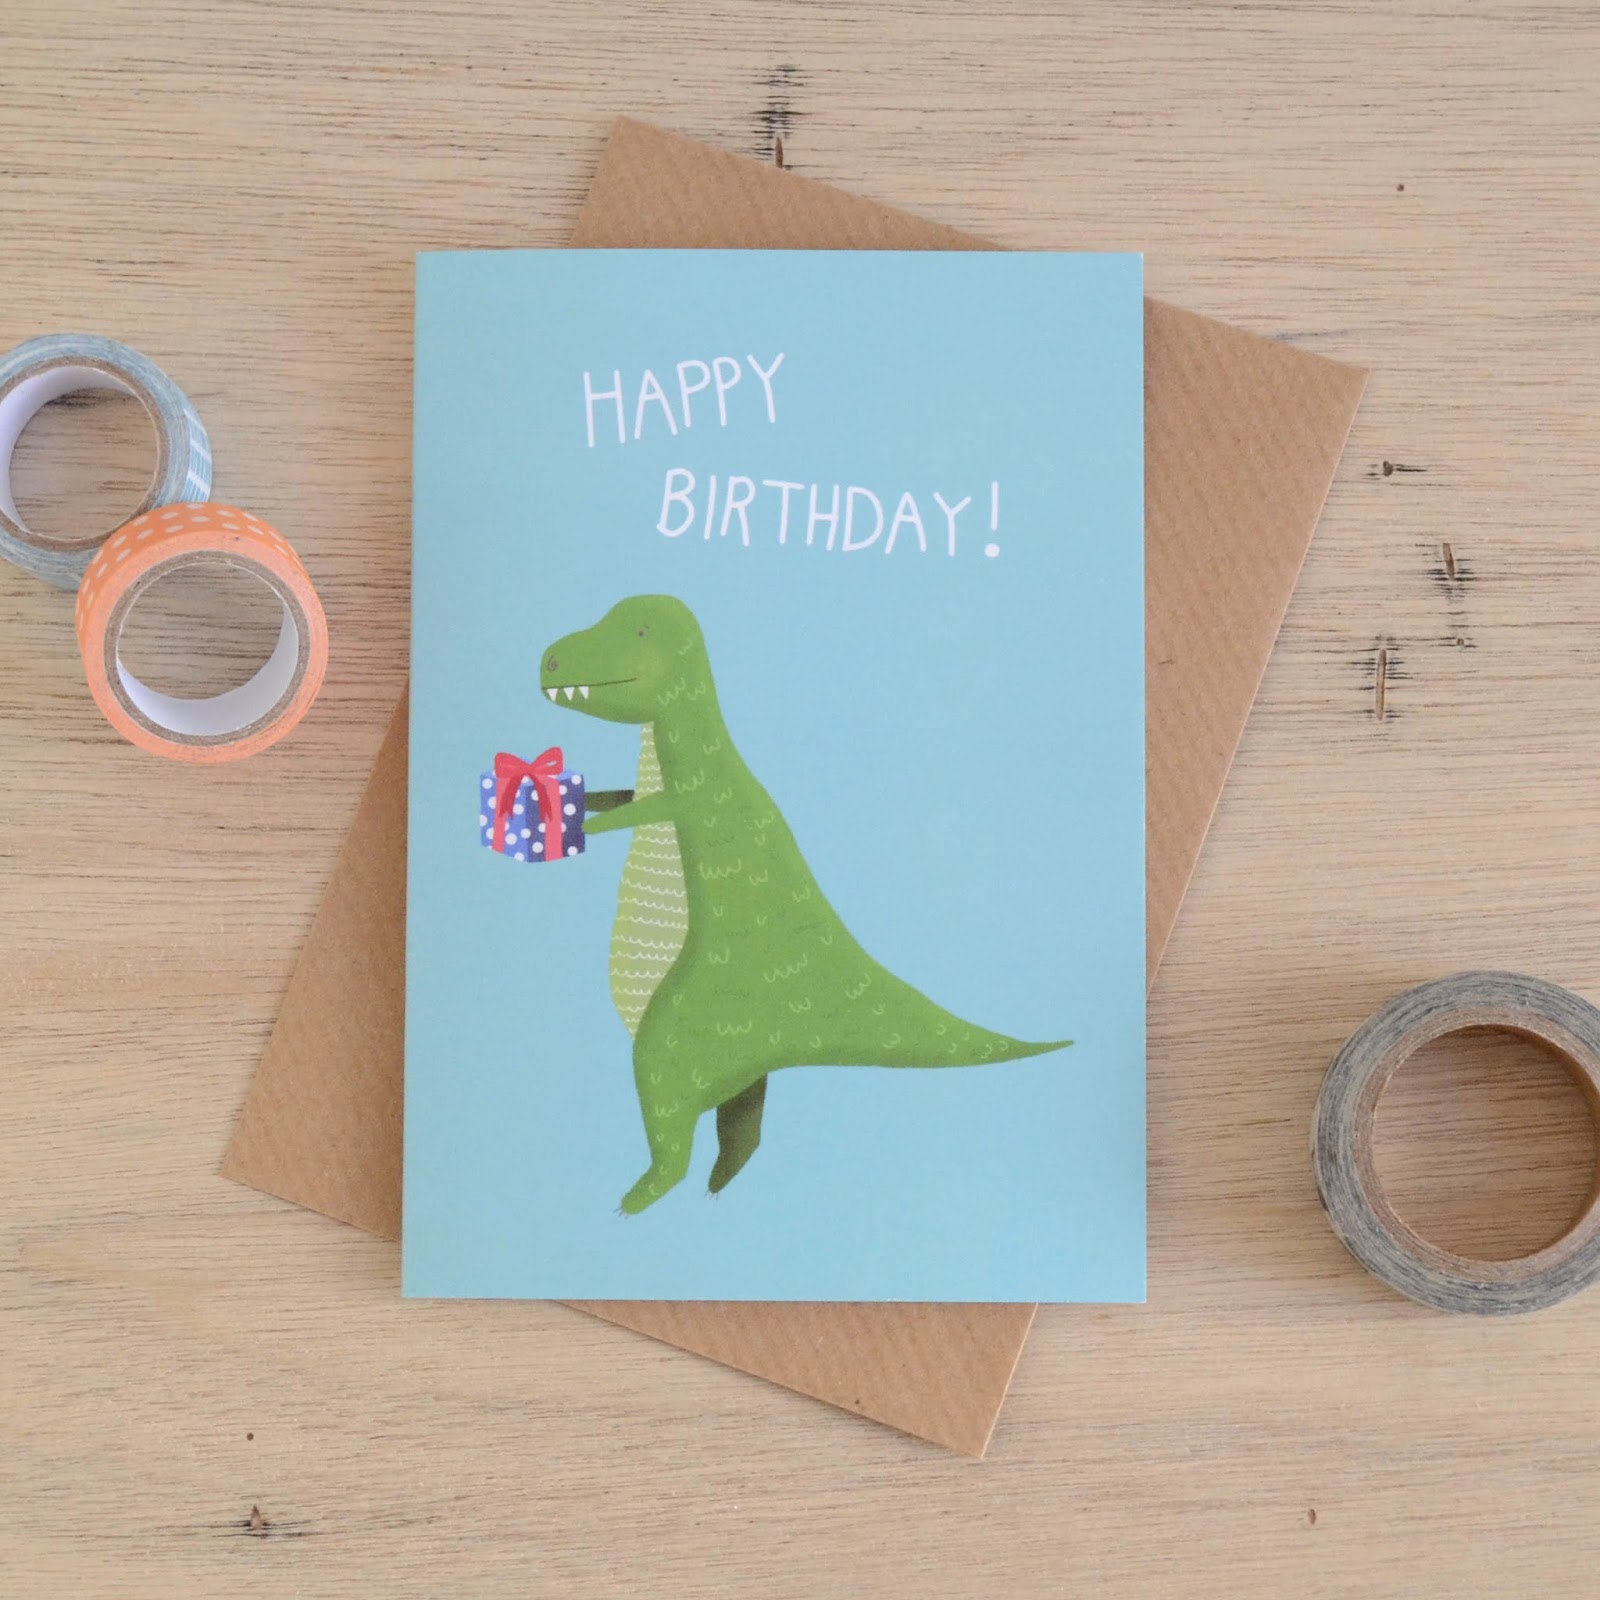 http://folksy.com/items/5725591-T-Rex-Birthday-Card